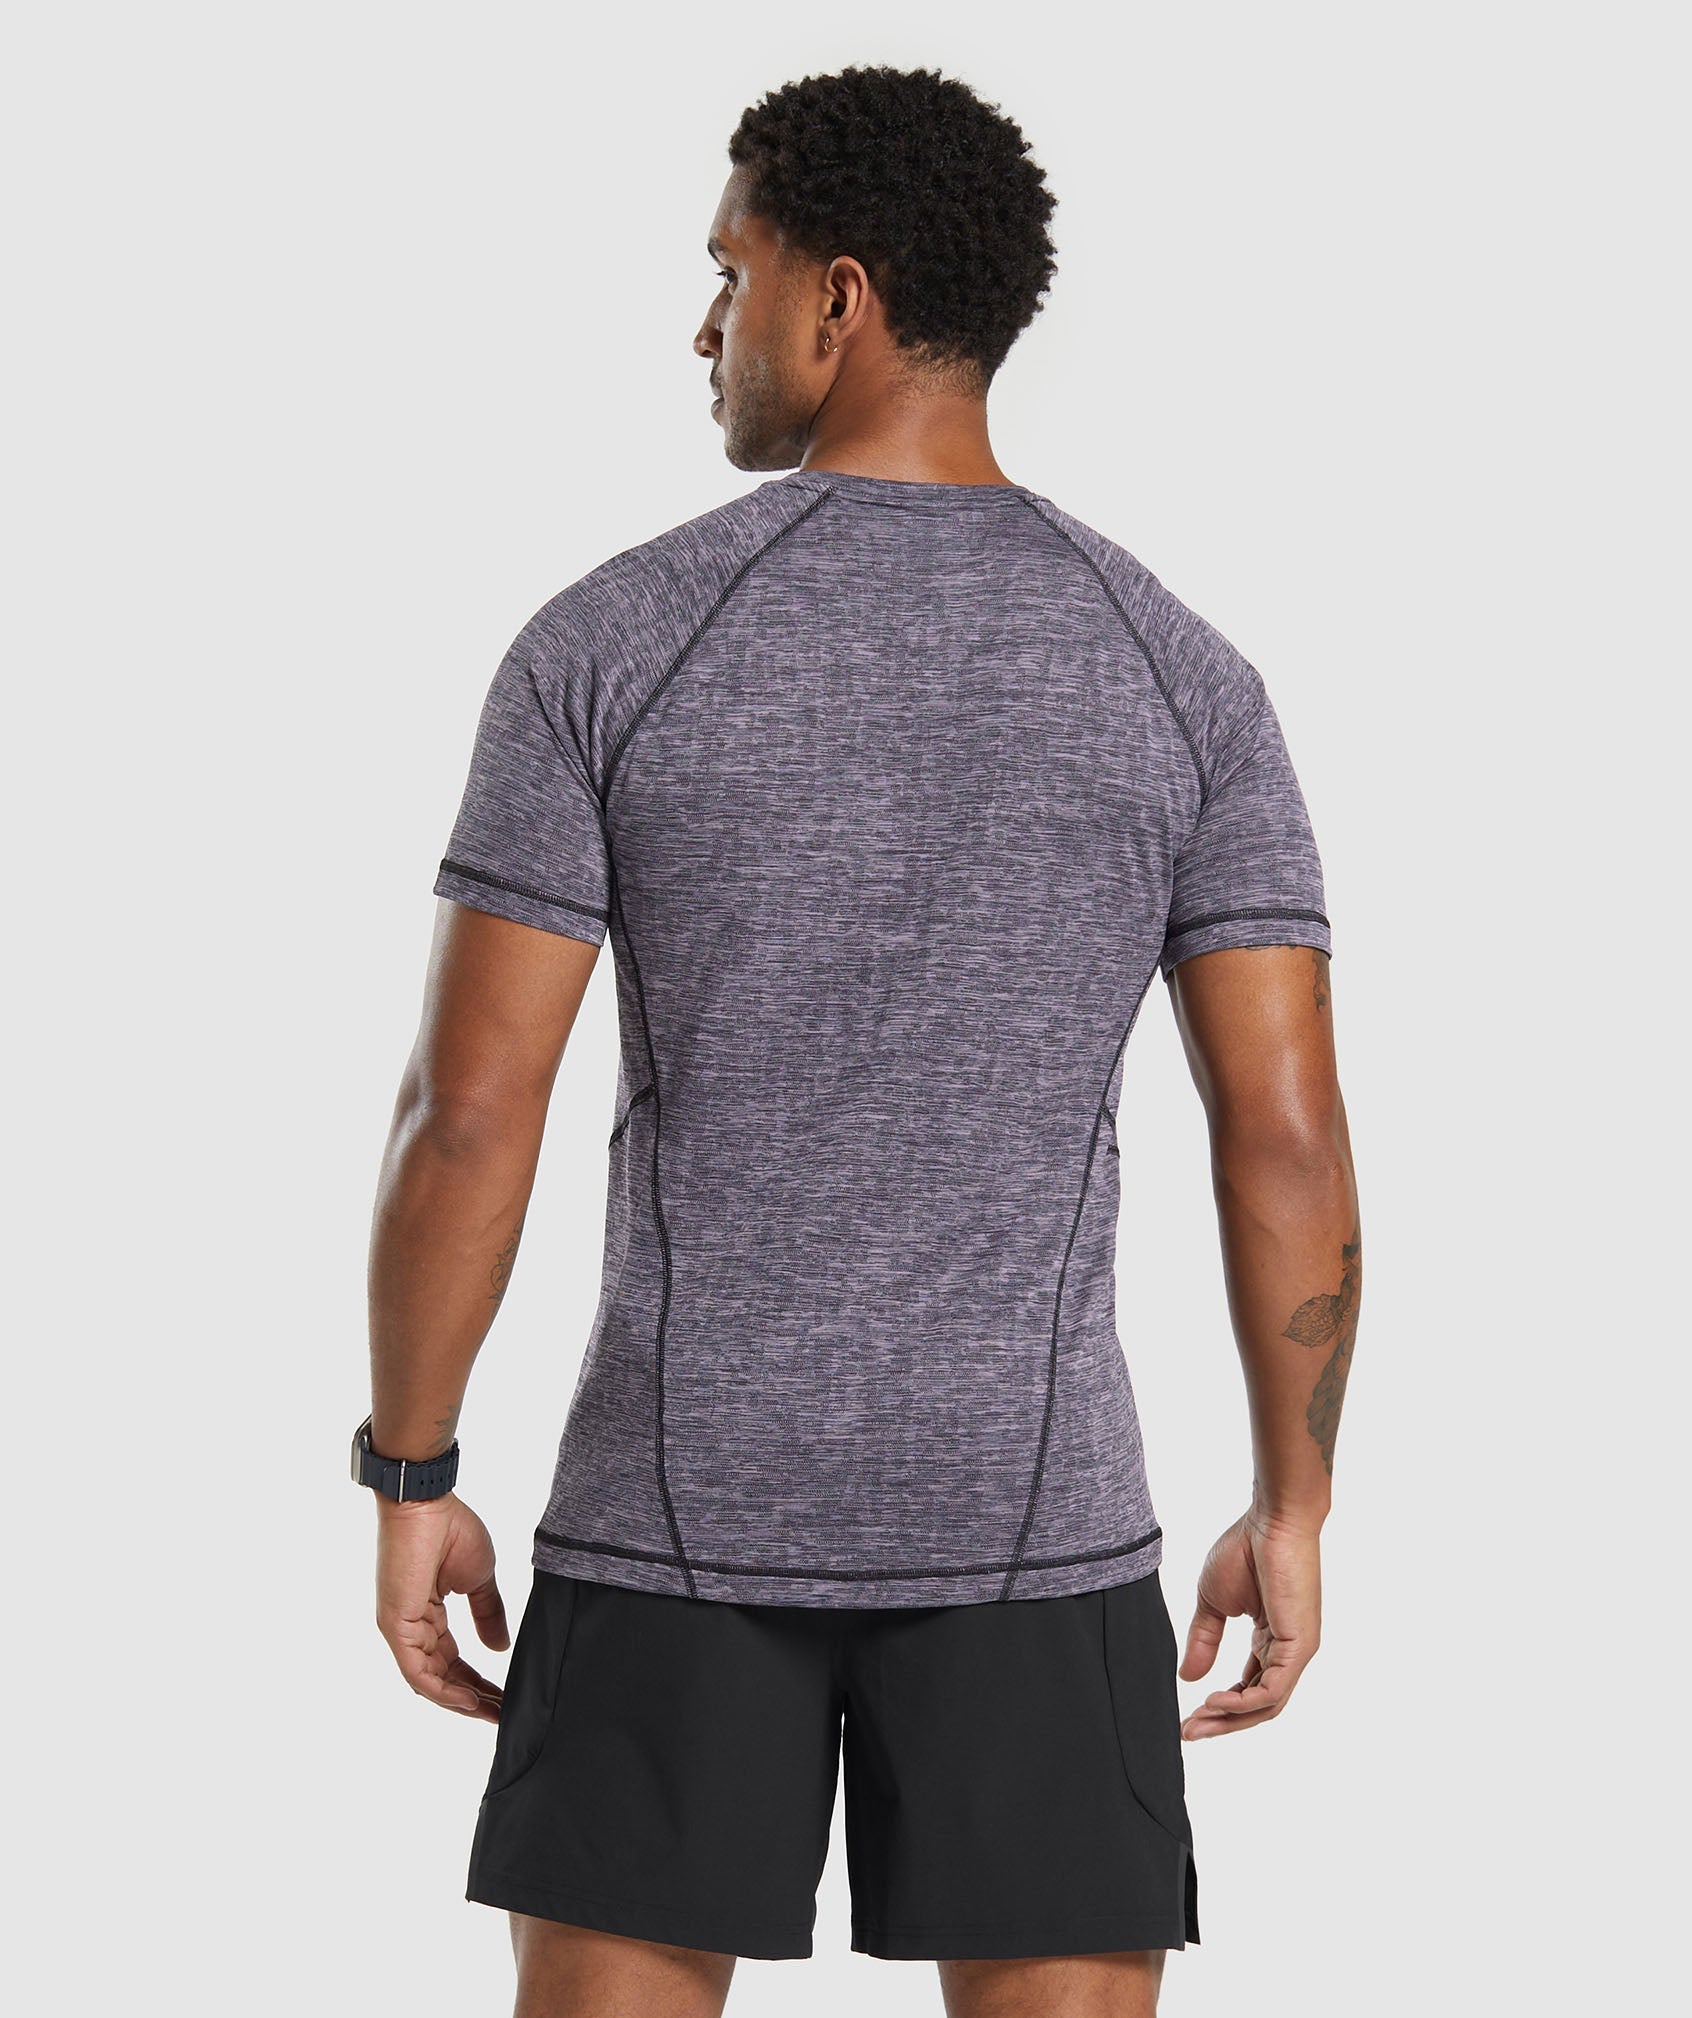 Apex T-Shirt in Fog Purple/Black - view 2